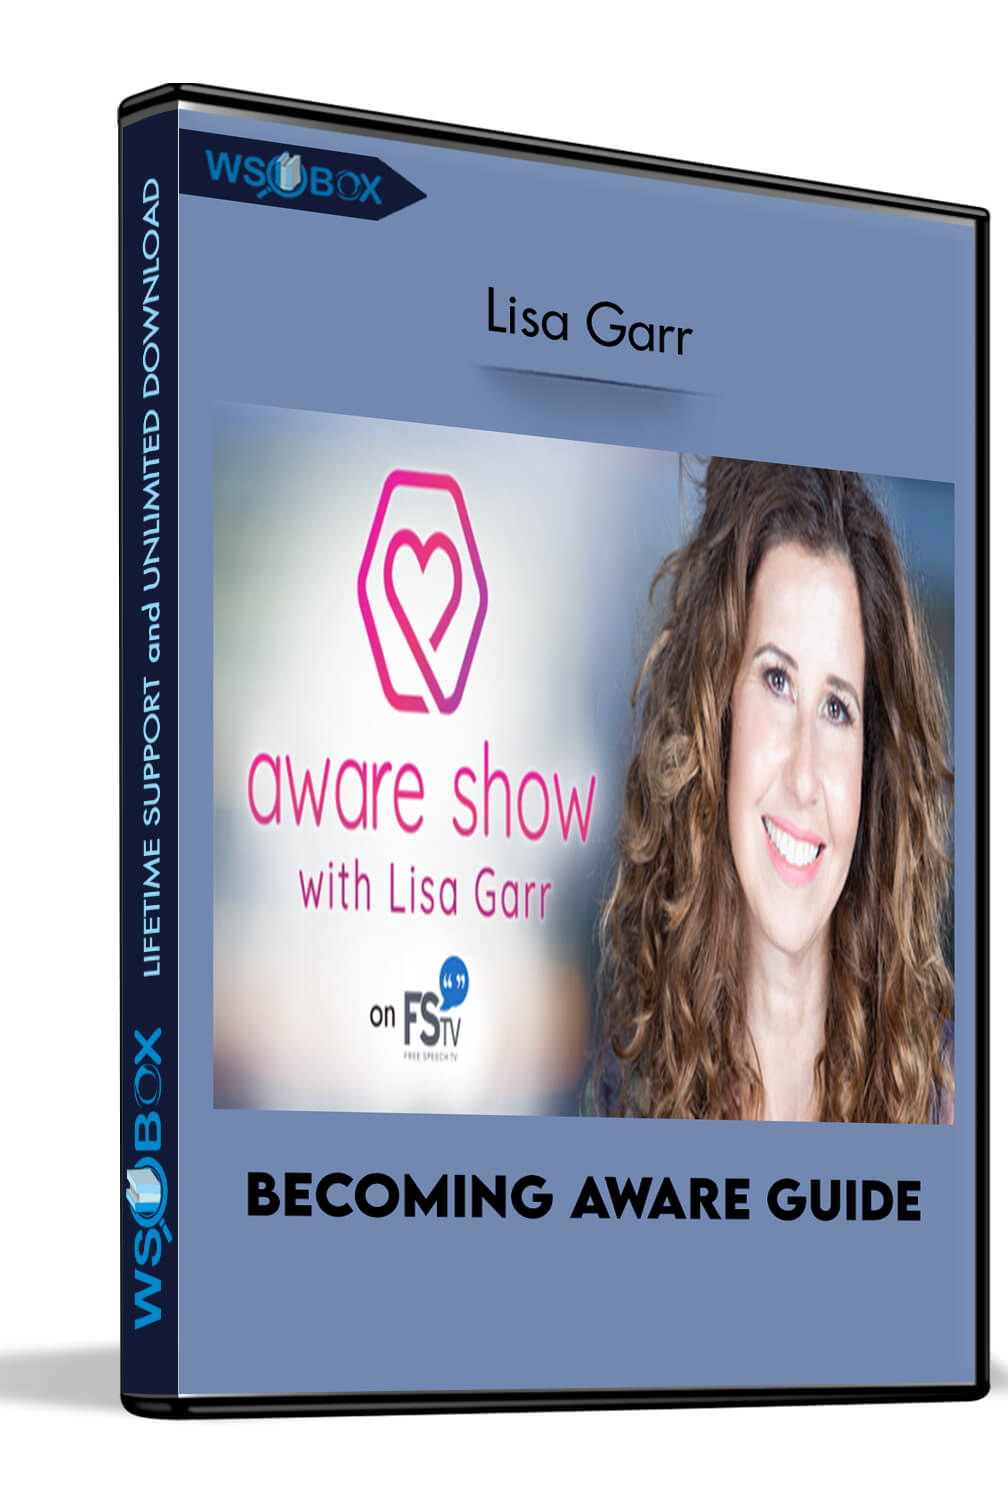 Becoming Aware Guide – Lisa Garr